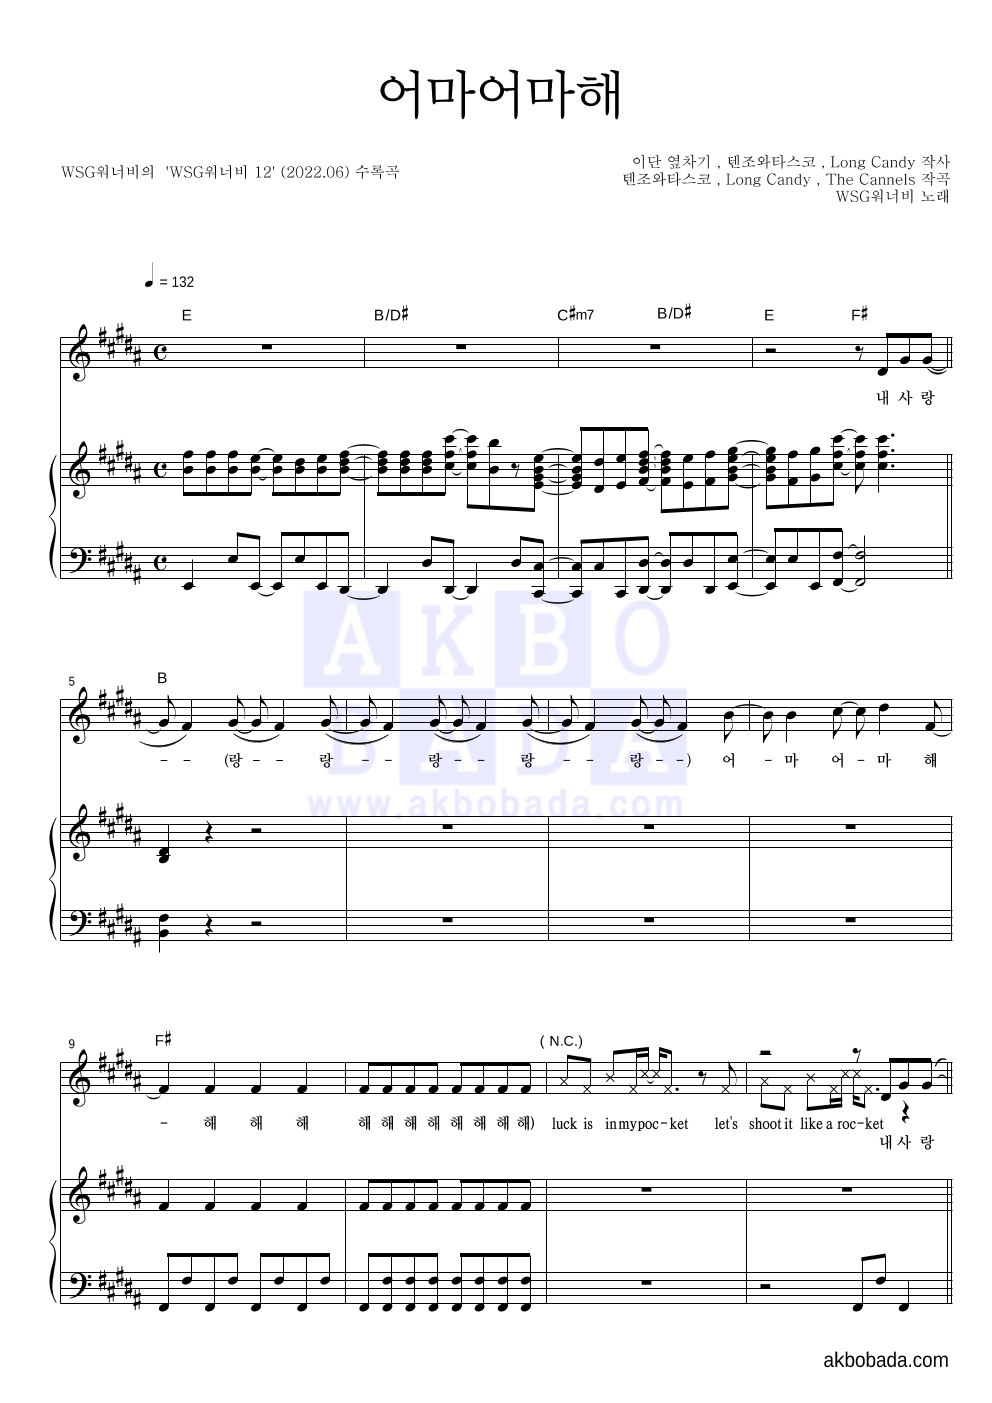 WSG워너비 - 어마어마해 피아노 3단 악보 